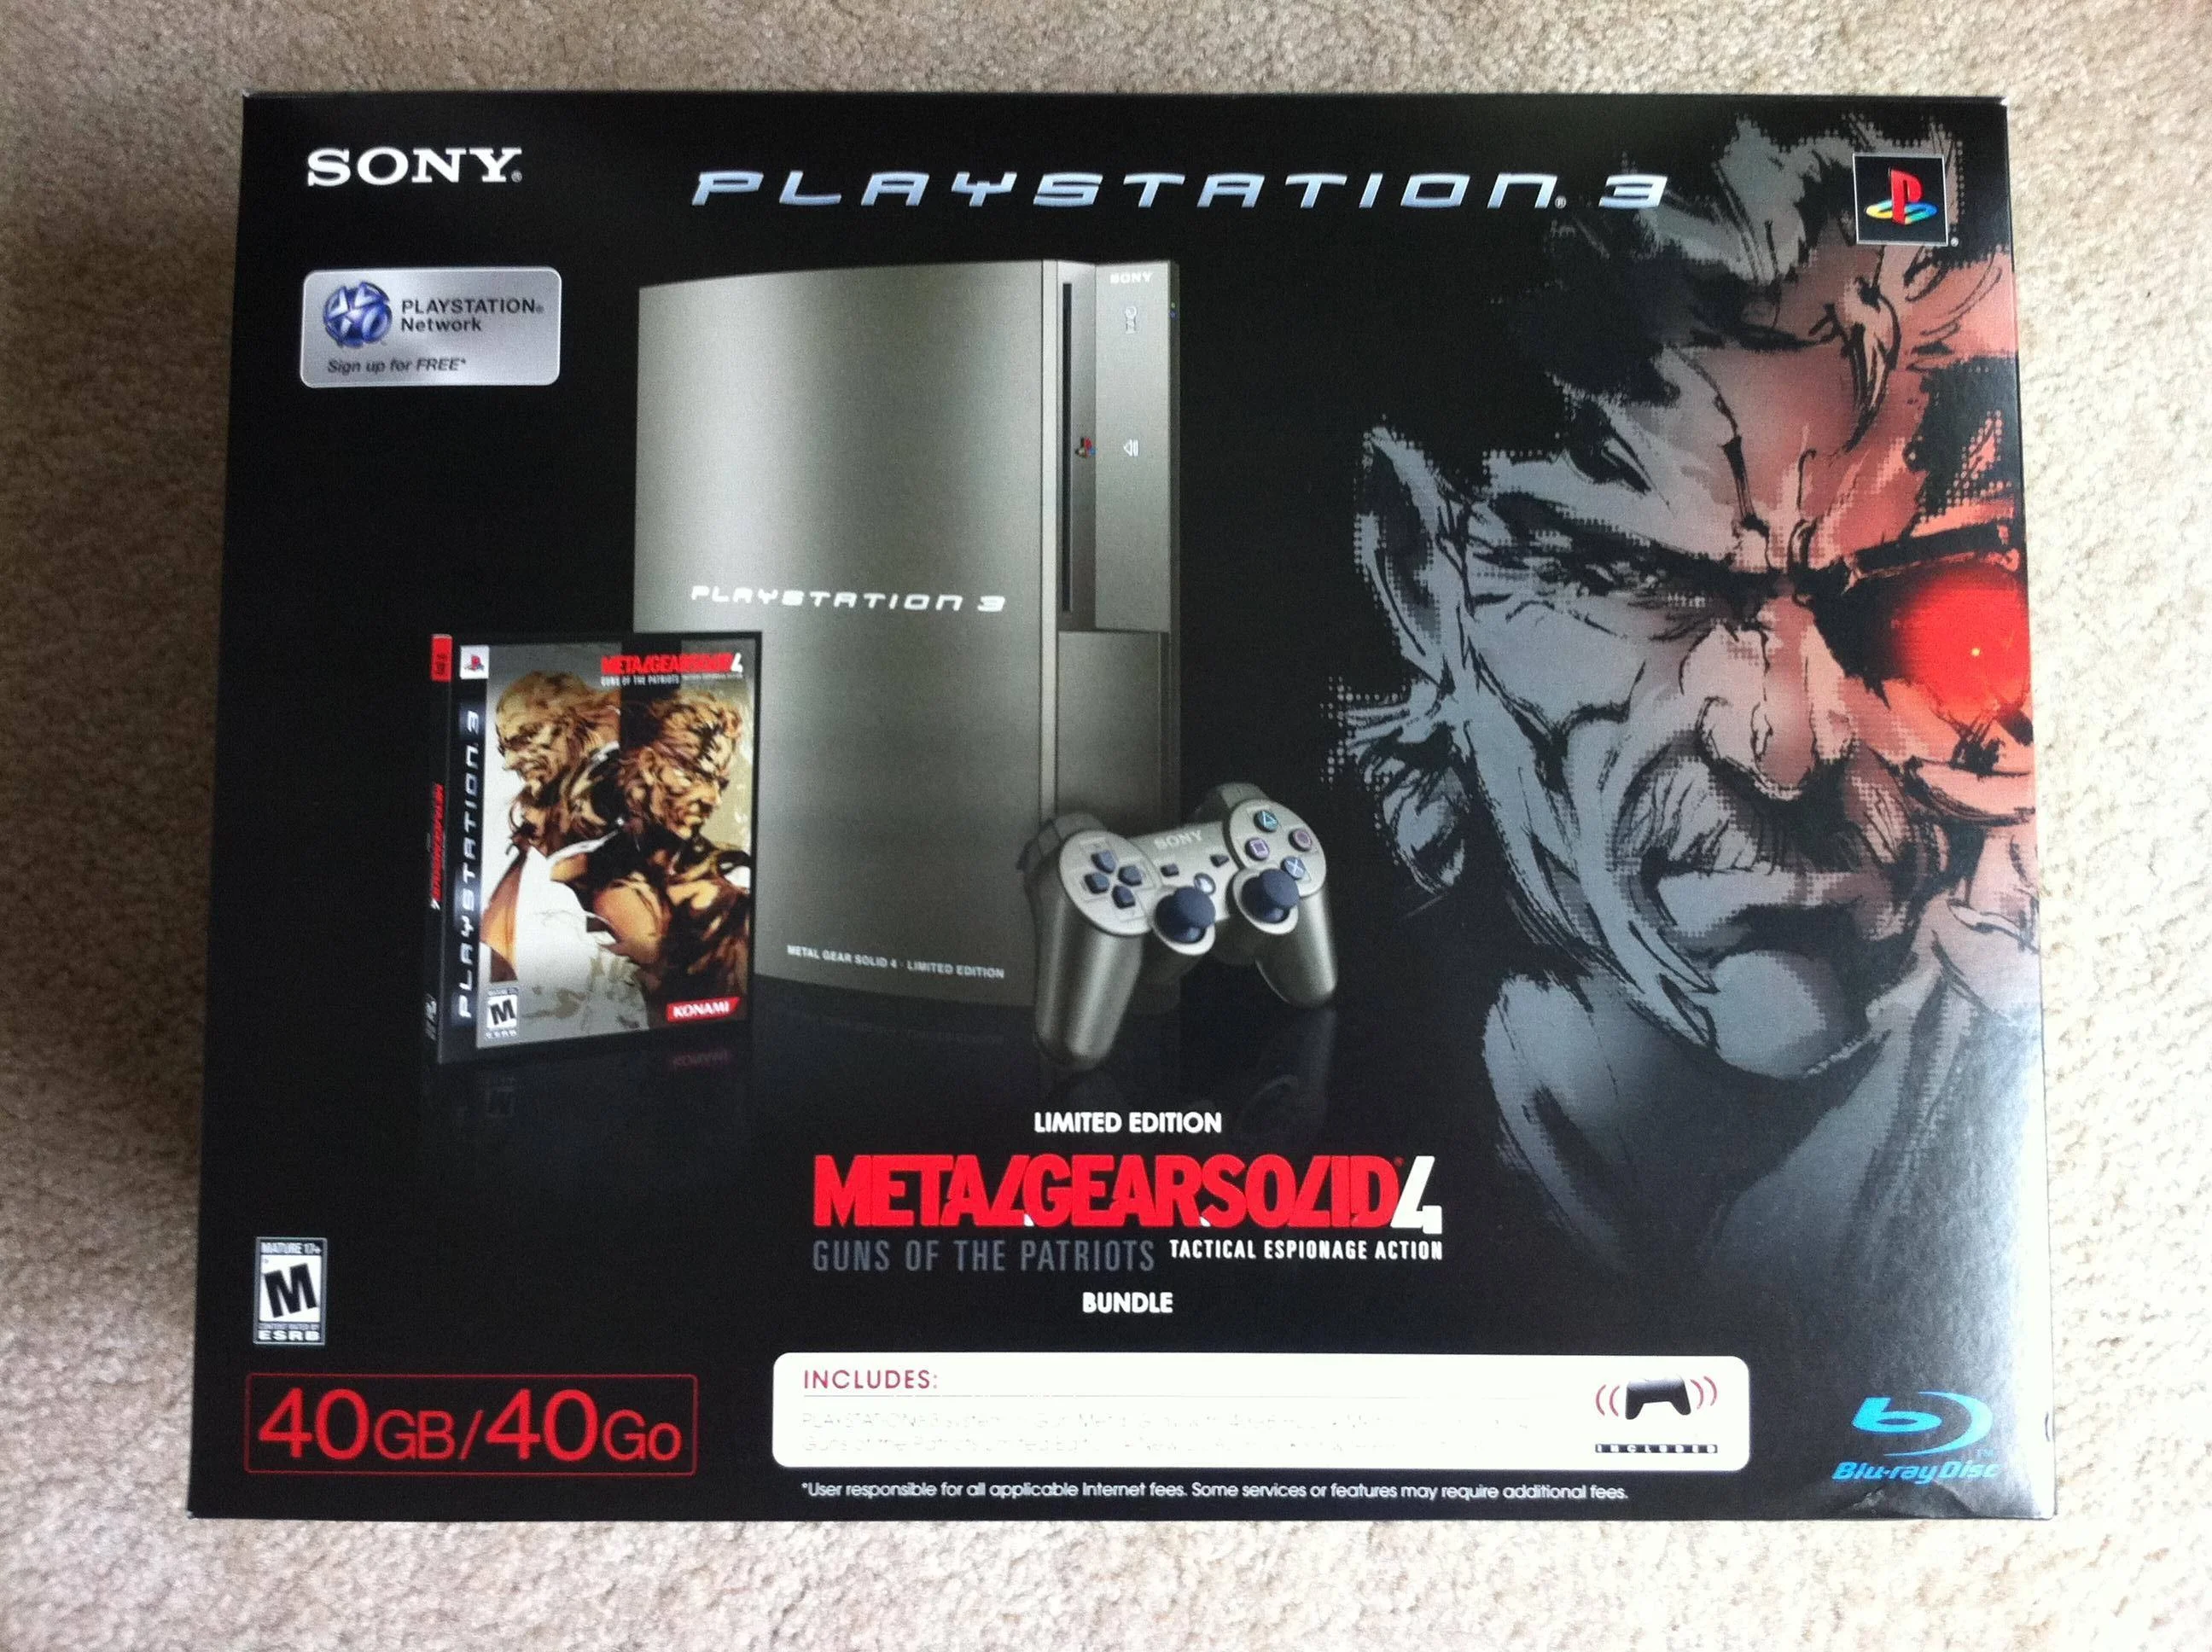 Образы пс3. Metal Gear Limited Edition ps3. Metal Gear Solid 4 ps3 Limited Edition. Ps3 Slim Limited Edition. Sony PLAYSTATION 3 Metal Gear Solid Limited Edition.